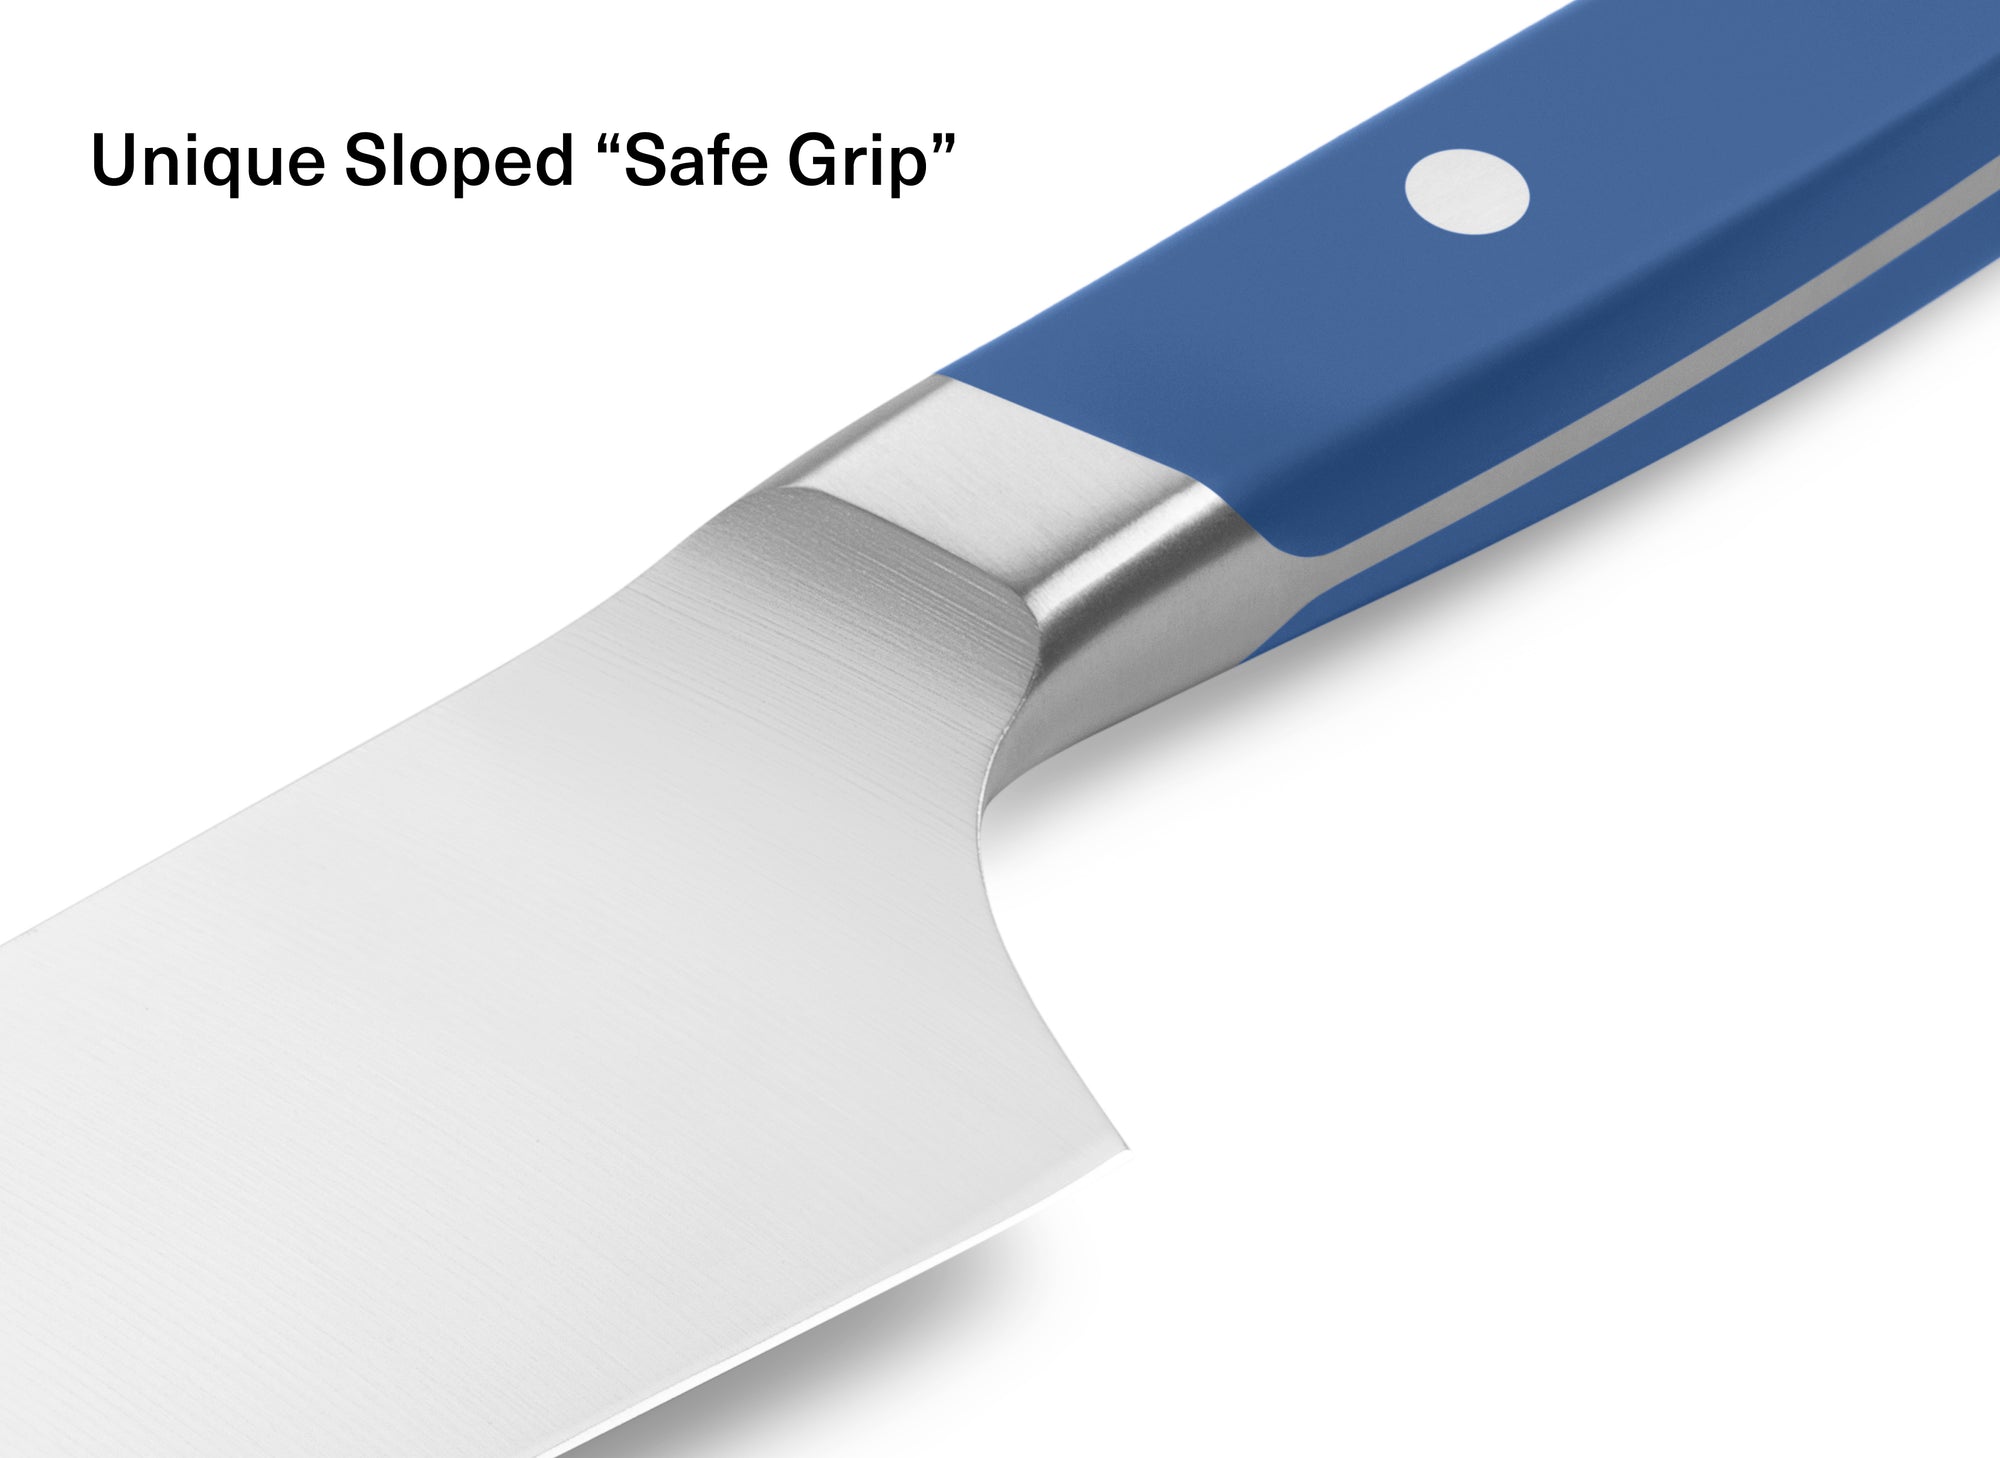 The Misen Chef's Knife features a unique sloped safe grip.